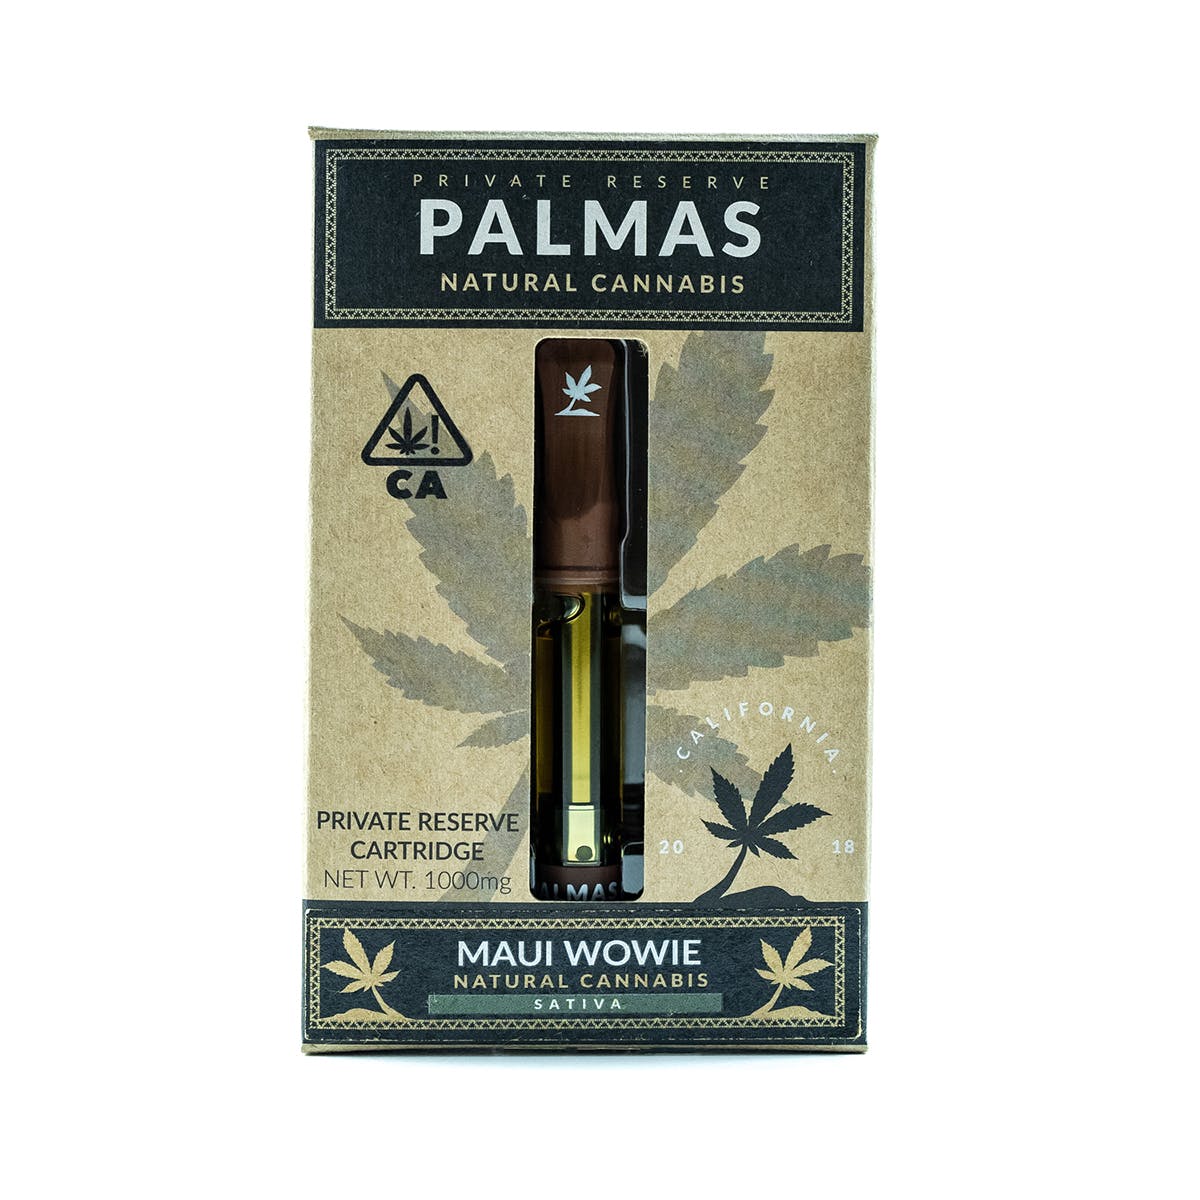 marijuana-dispensaries-og-central-20-cap-in-los-angeles-palmas-private-reserve-cartridge-maui-wowie